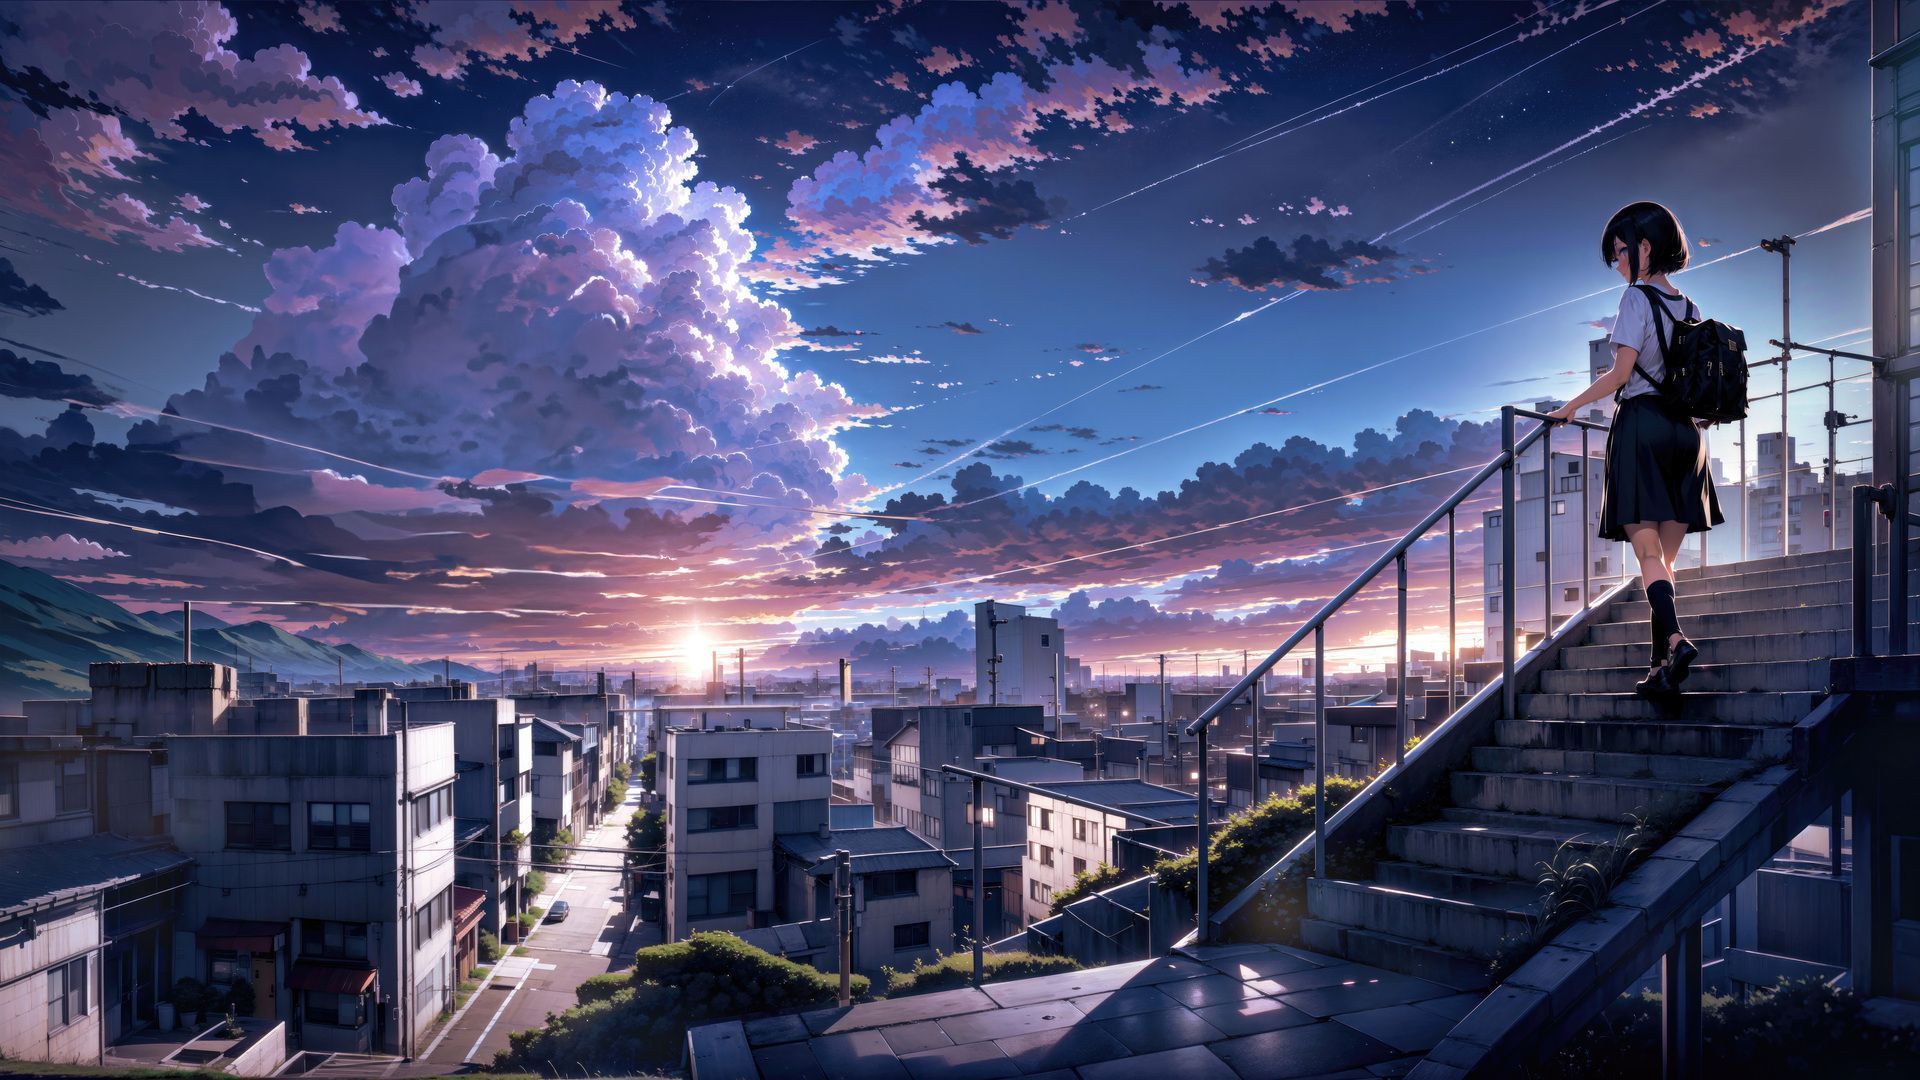 Makoto Shinkai Anime Cityscape 5k Laptop Full HD 1080P HD 4k Wallpaper, Image, Background, Photo and Picture